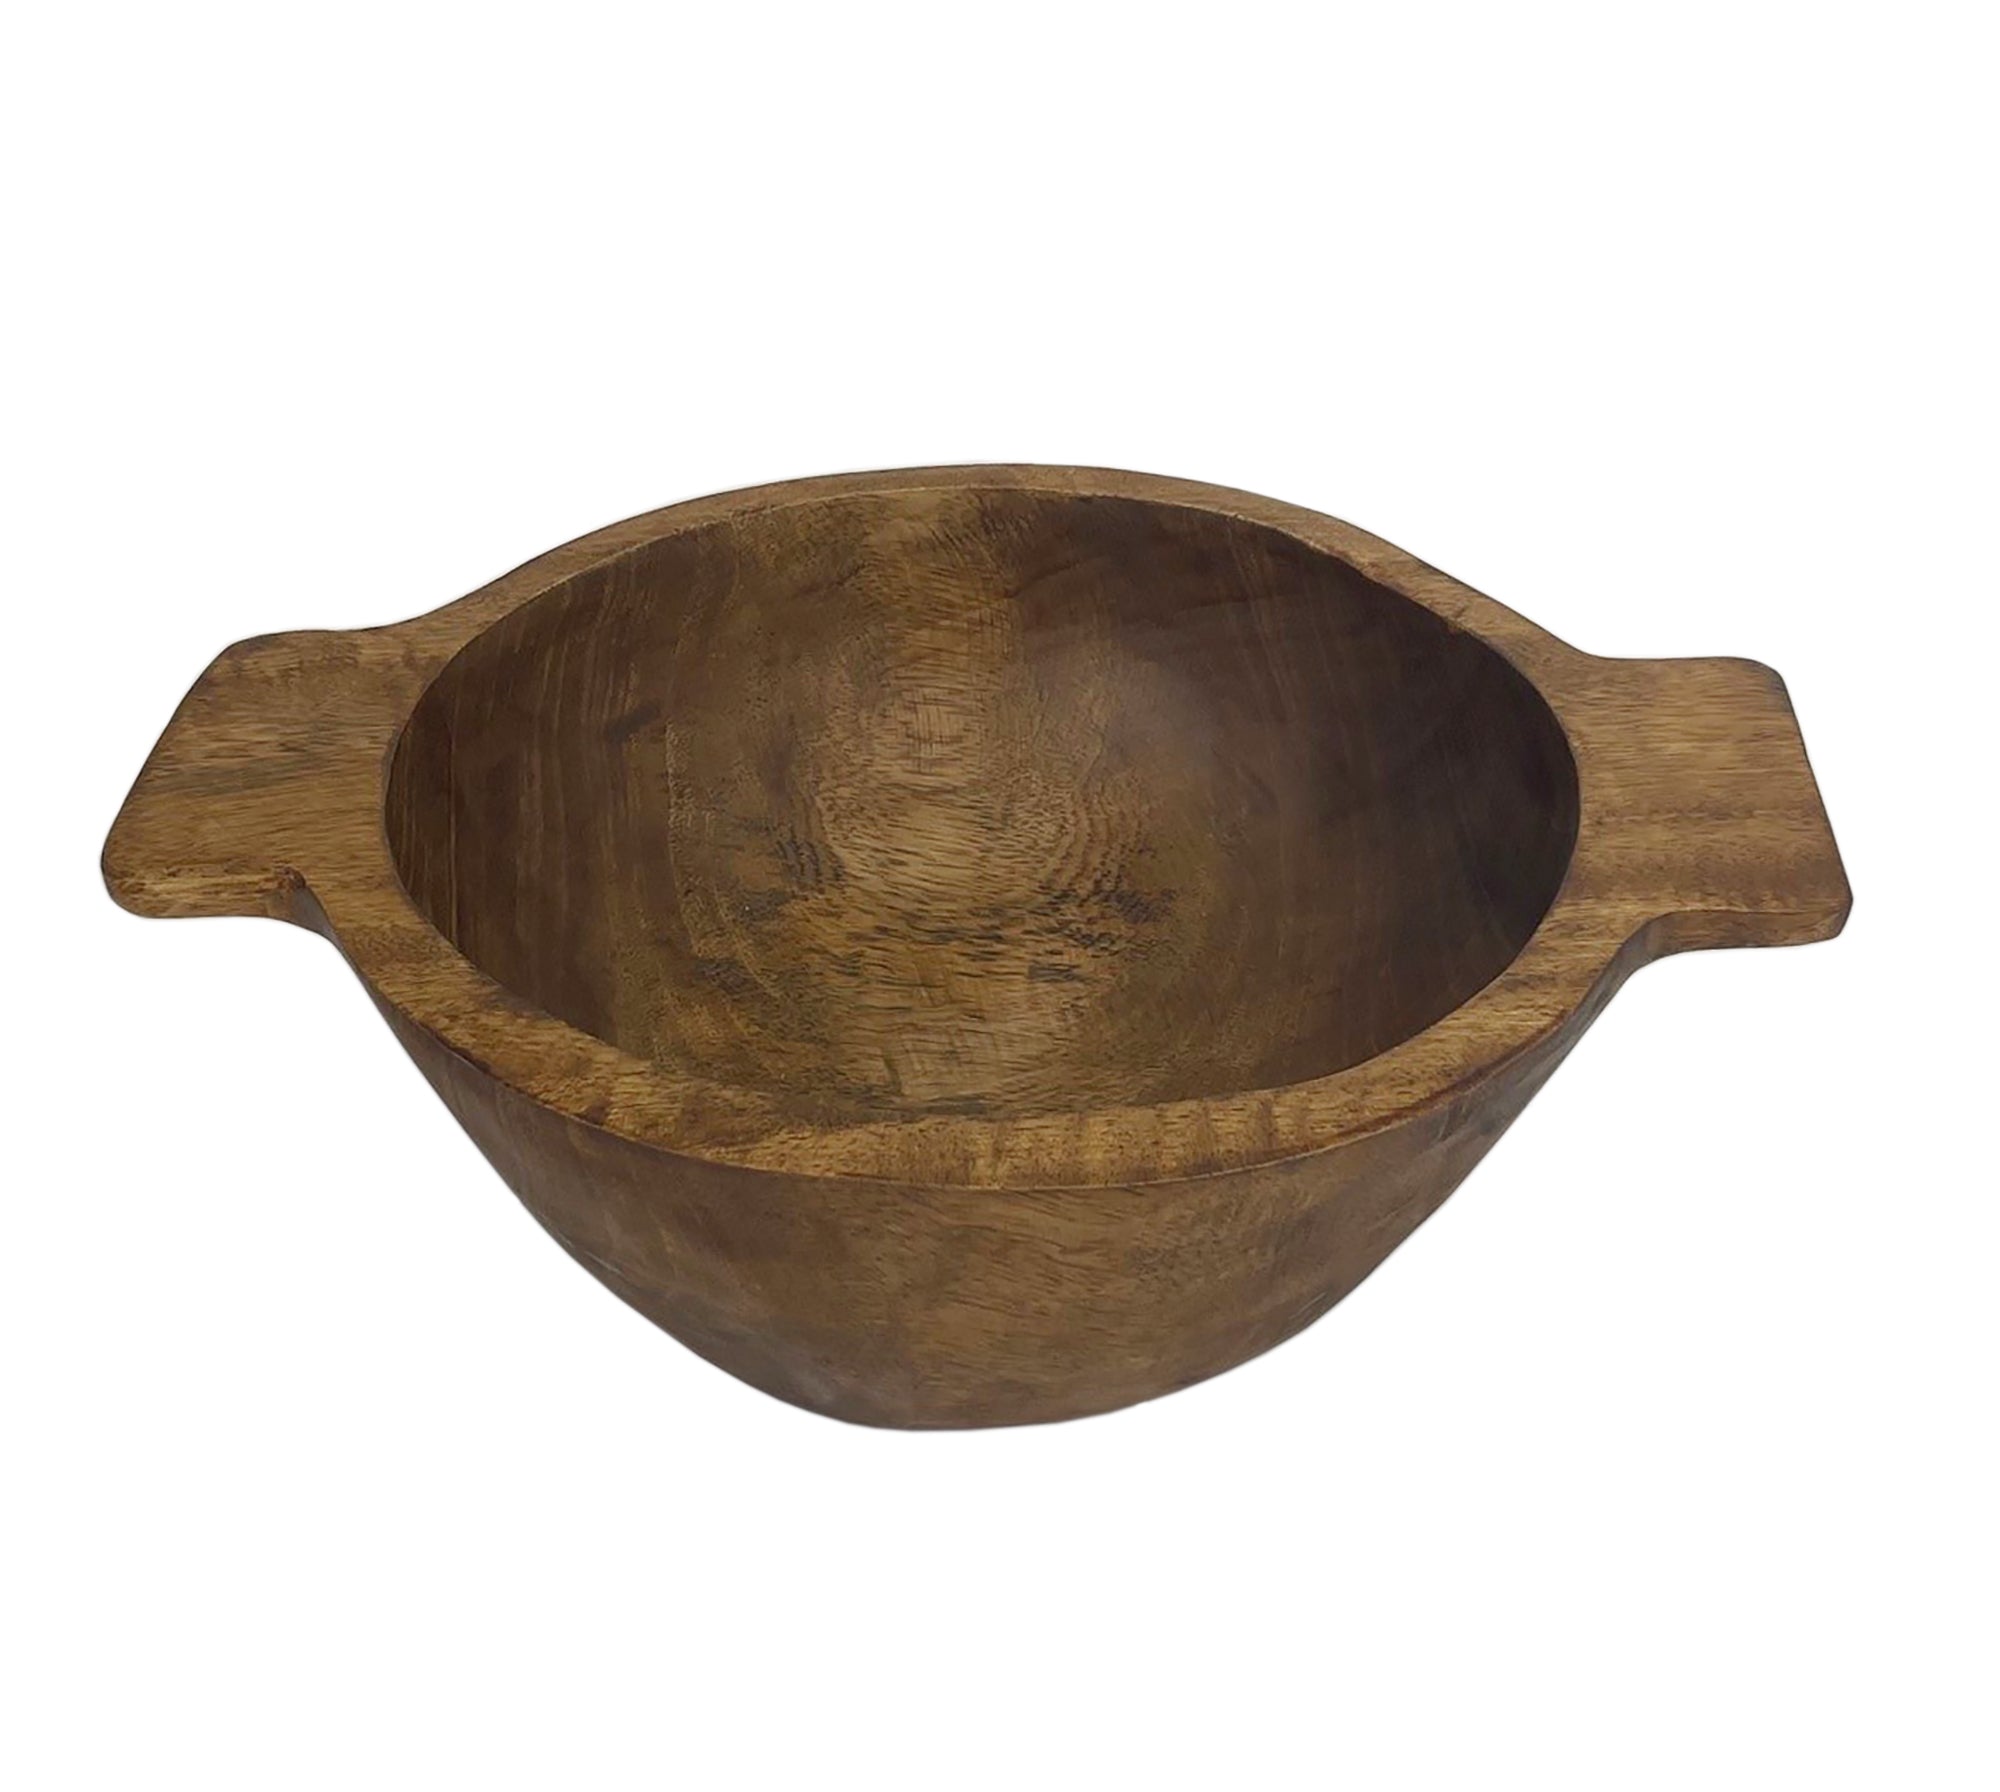 Mango Wood Round Bowl with Wood Handles